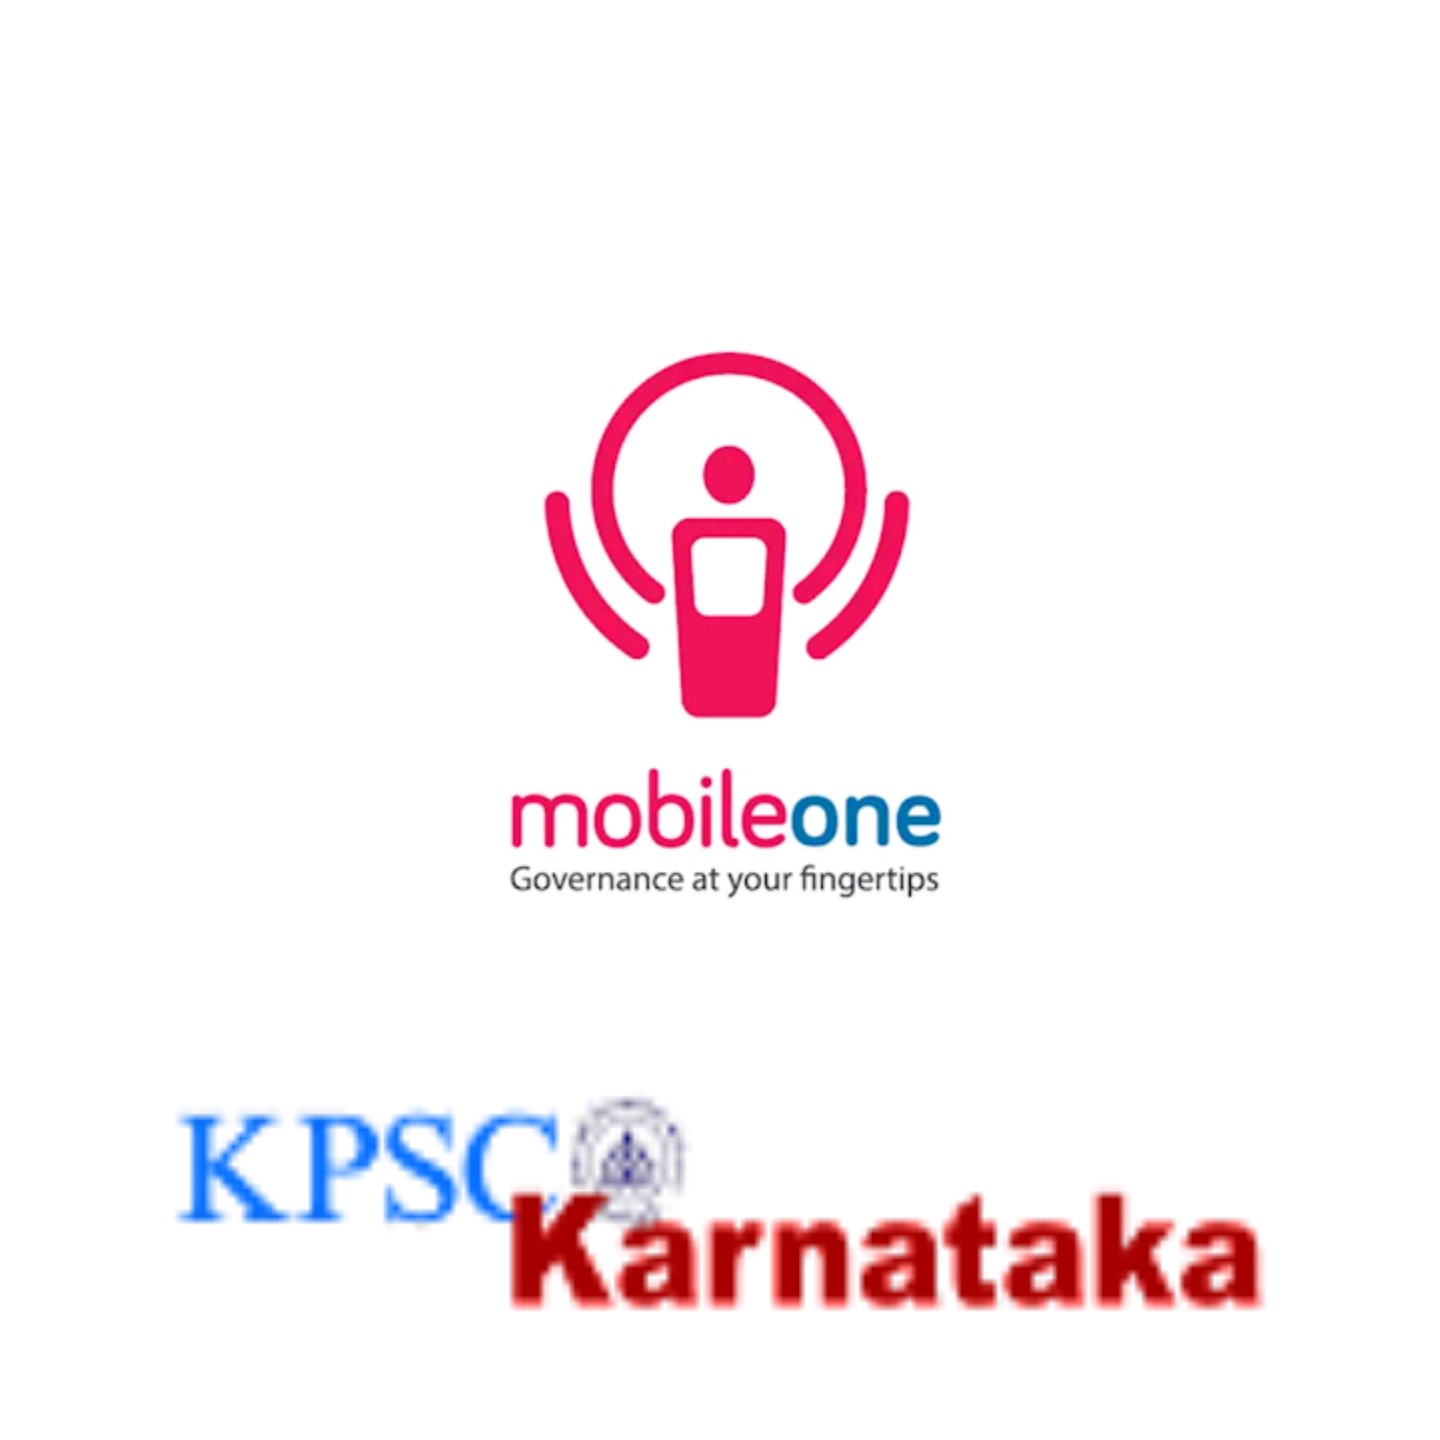 Karnataka Mobile one apk